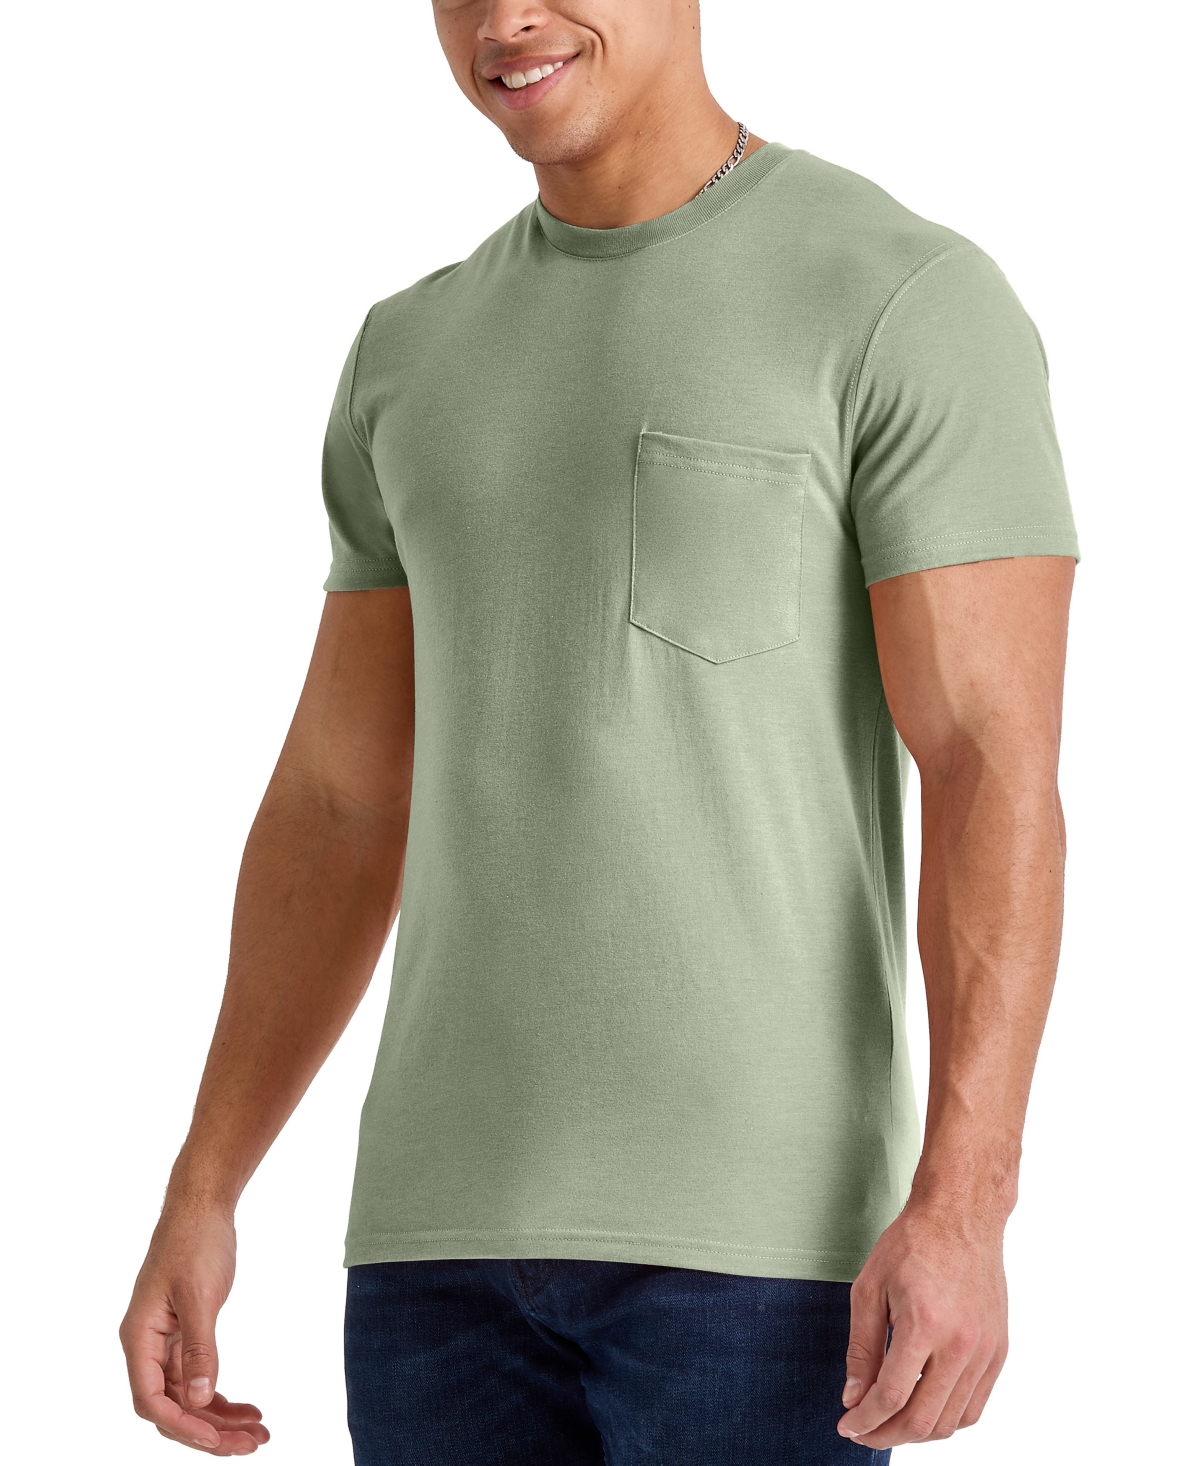 Men's Hanes Originals Cotton Short Sleeve Pocket T-shirt - White - U.S. Grown Cotton